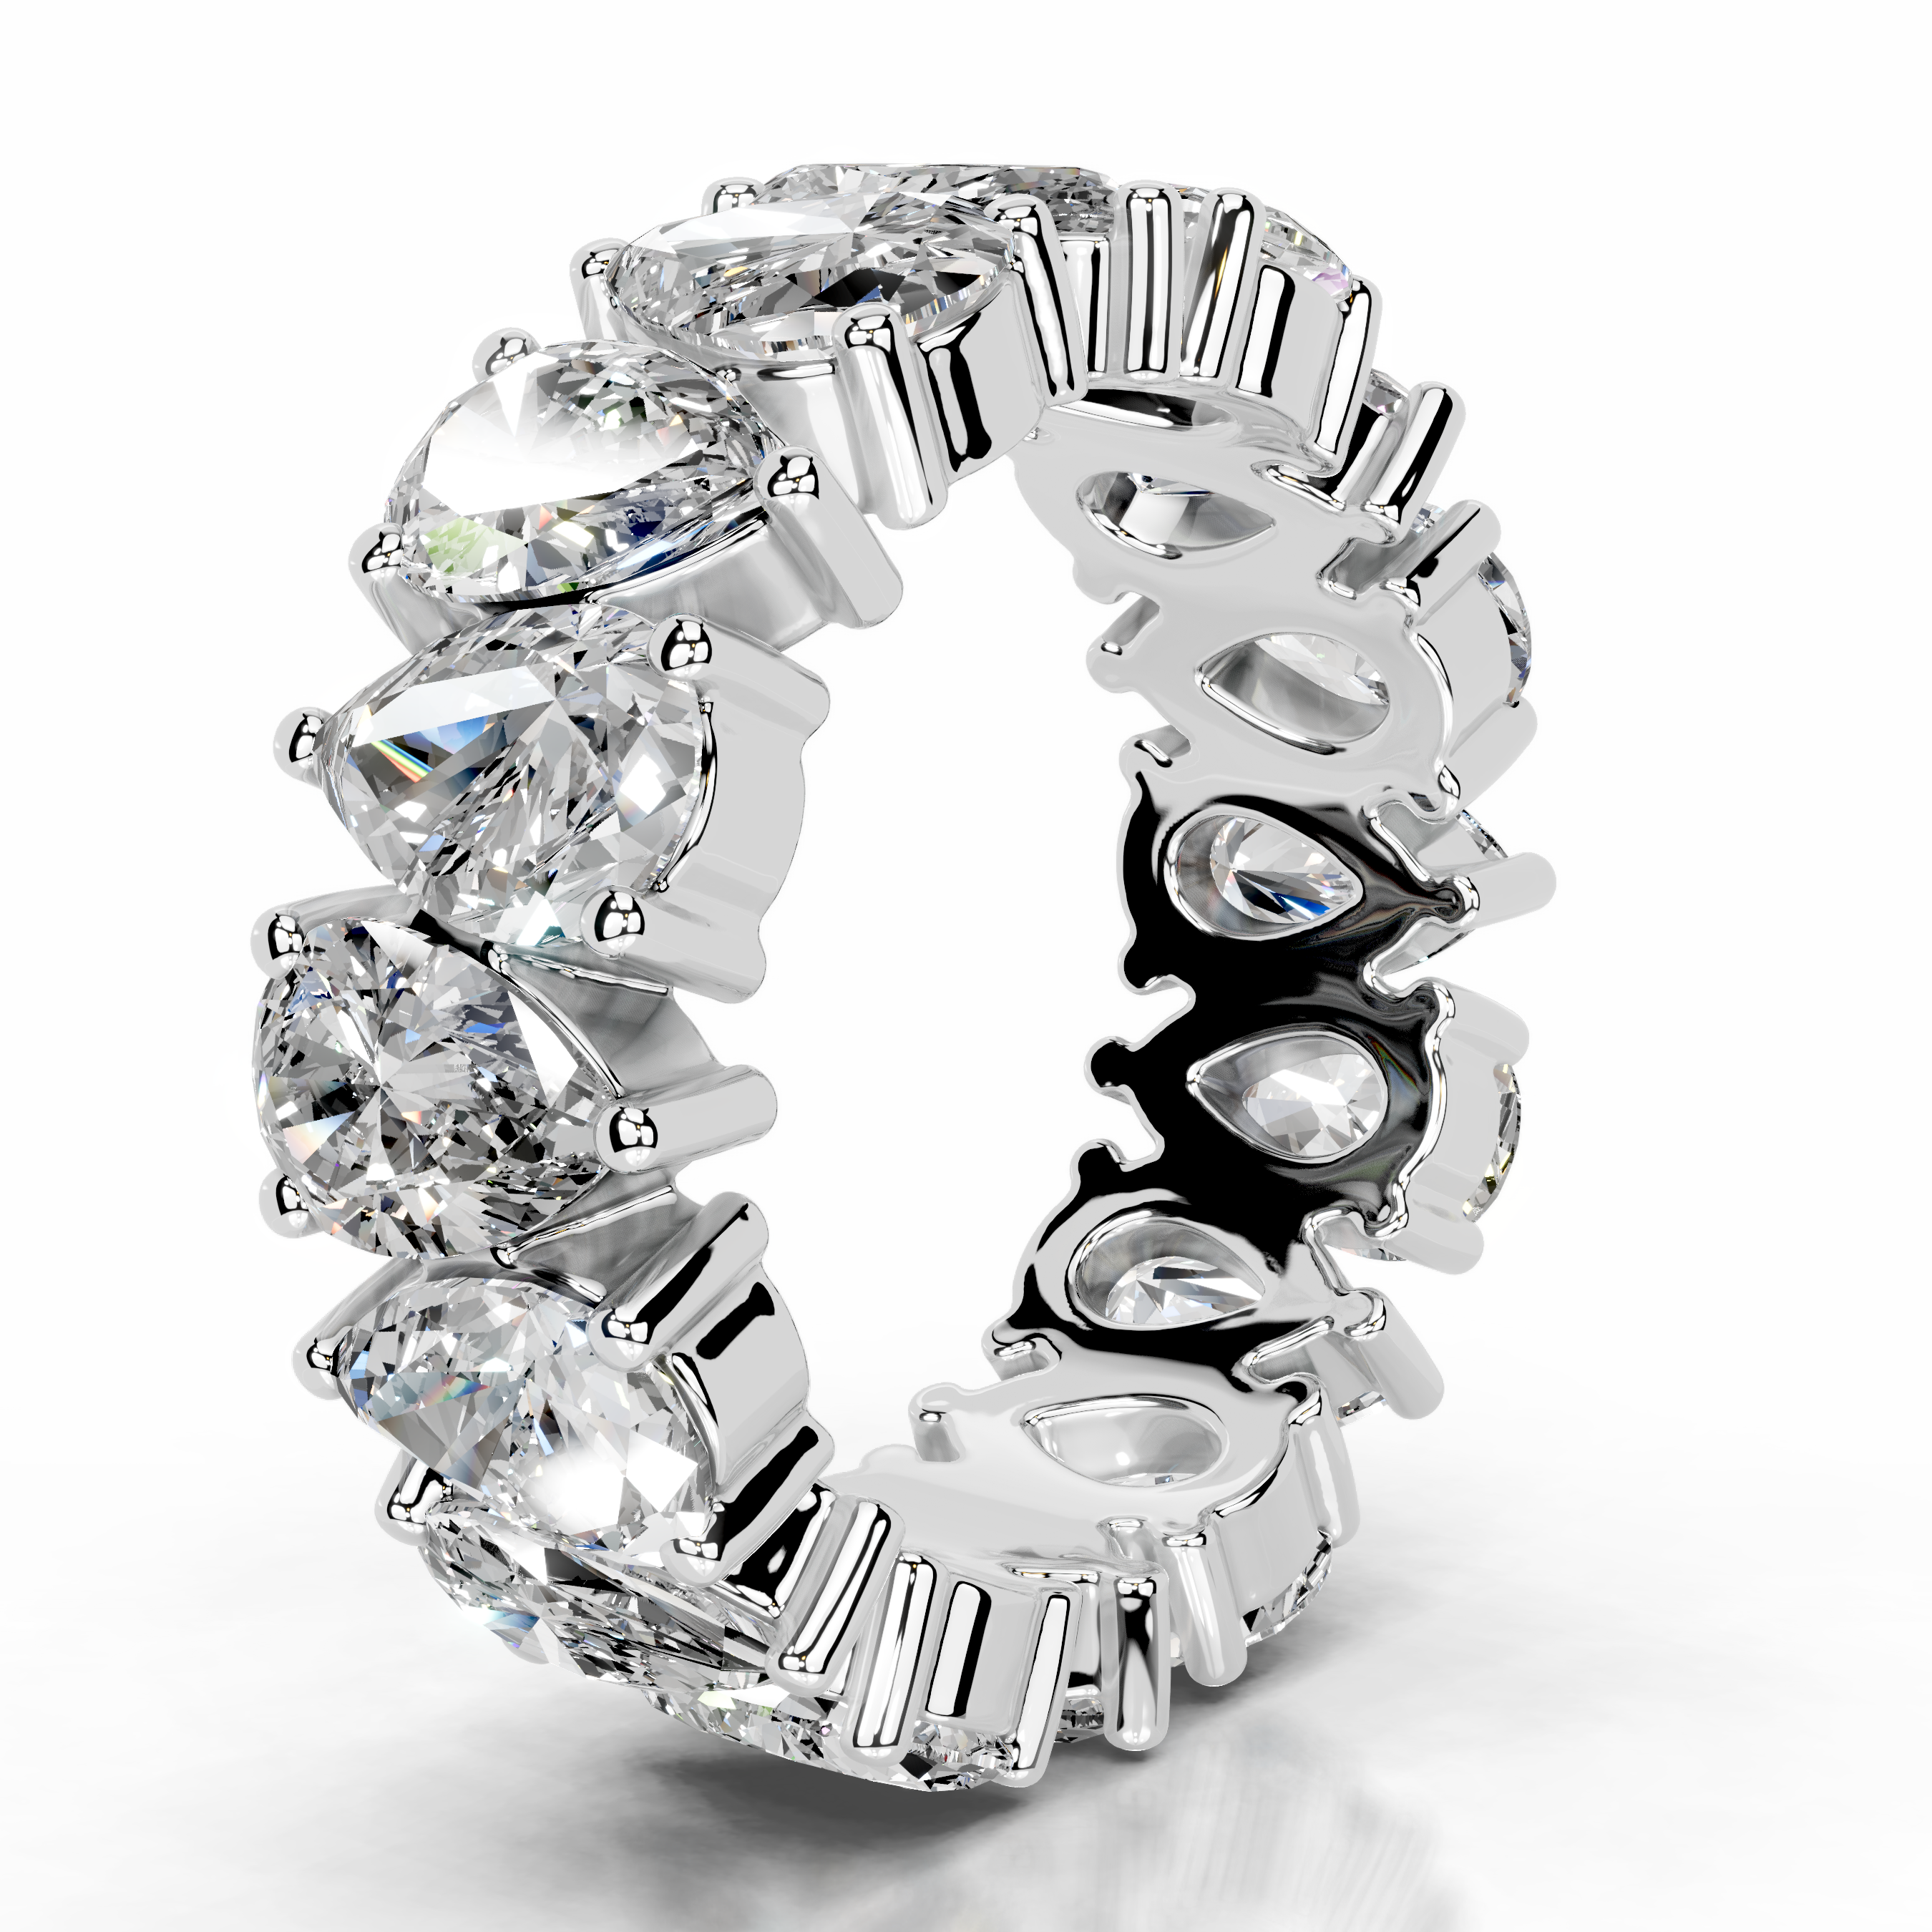 Sarah Diamond Wedding Ring   (6 Carat) -Platinum